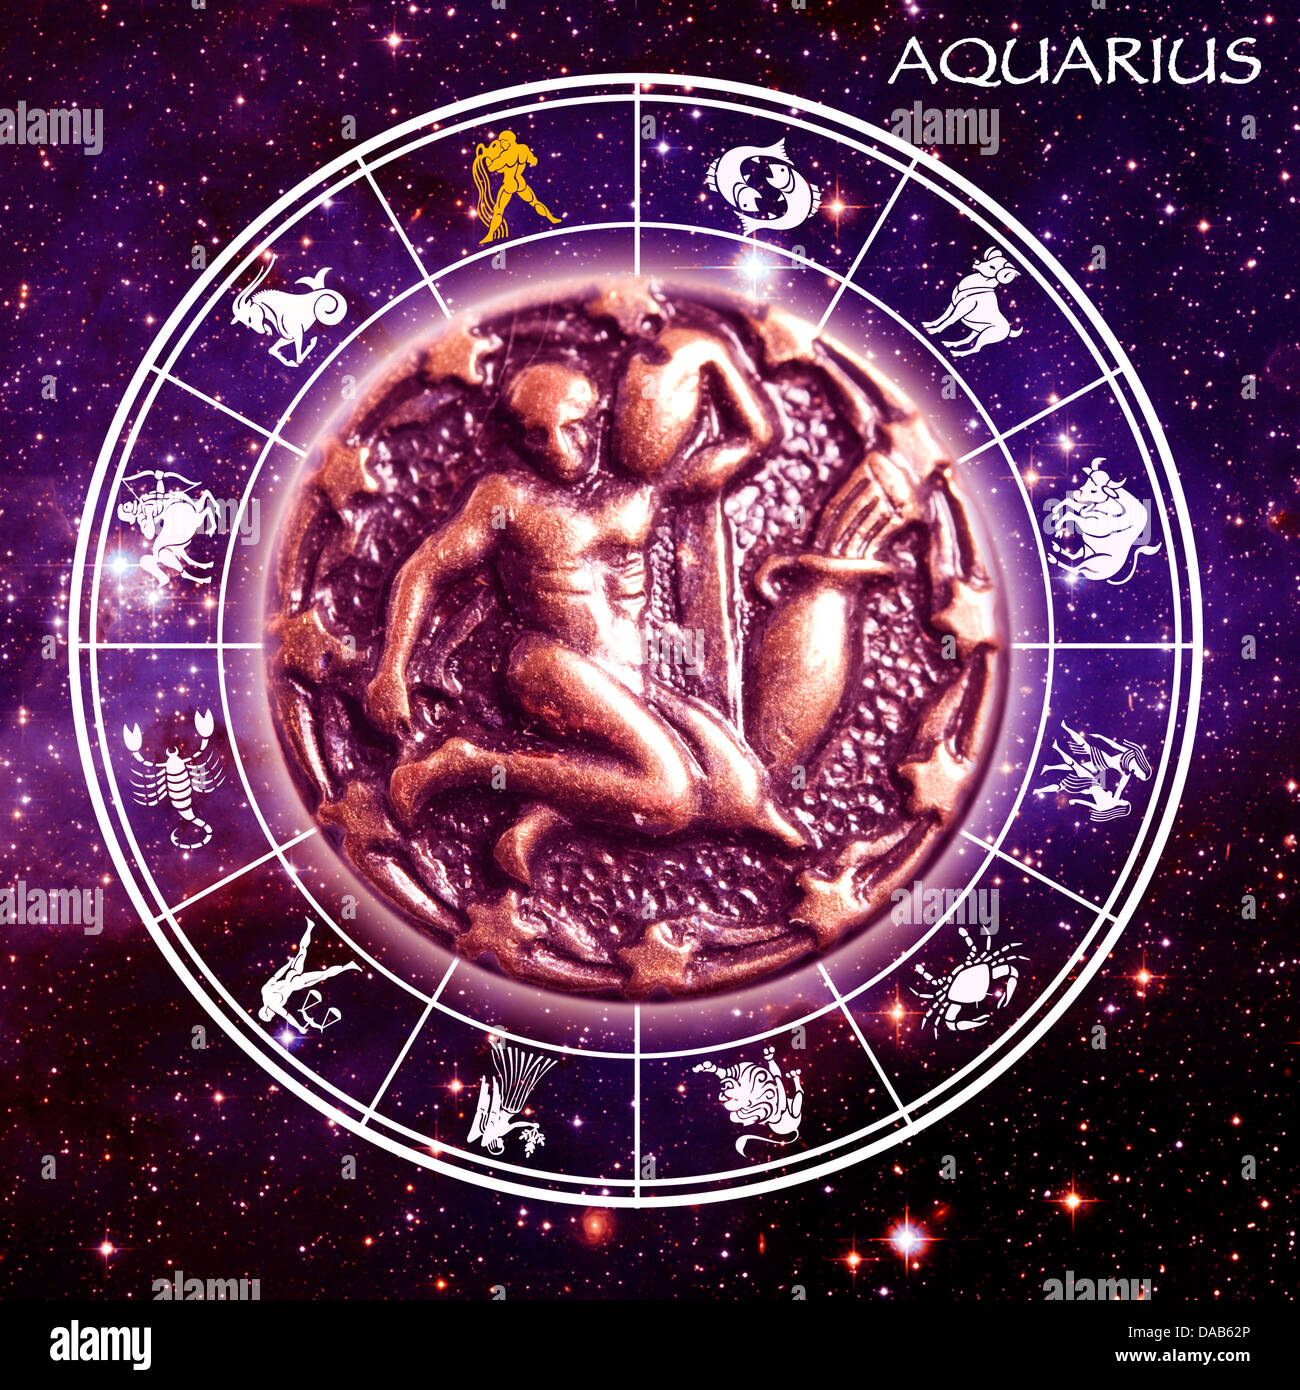 astrological sign of Aquarius Stock Photo